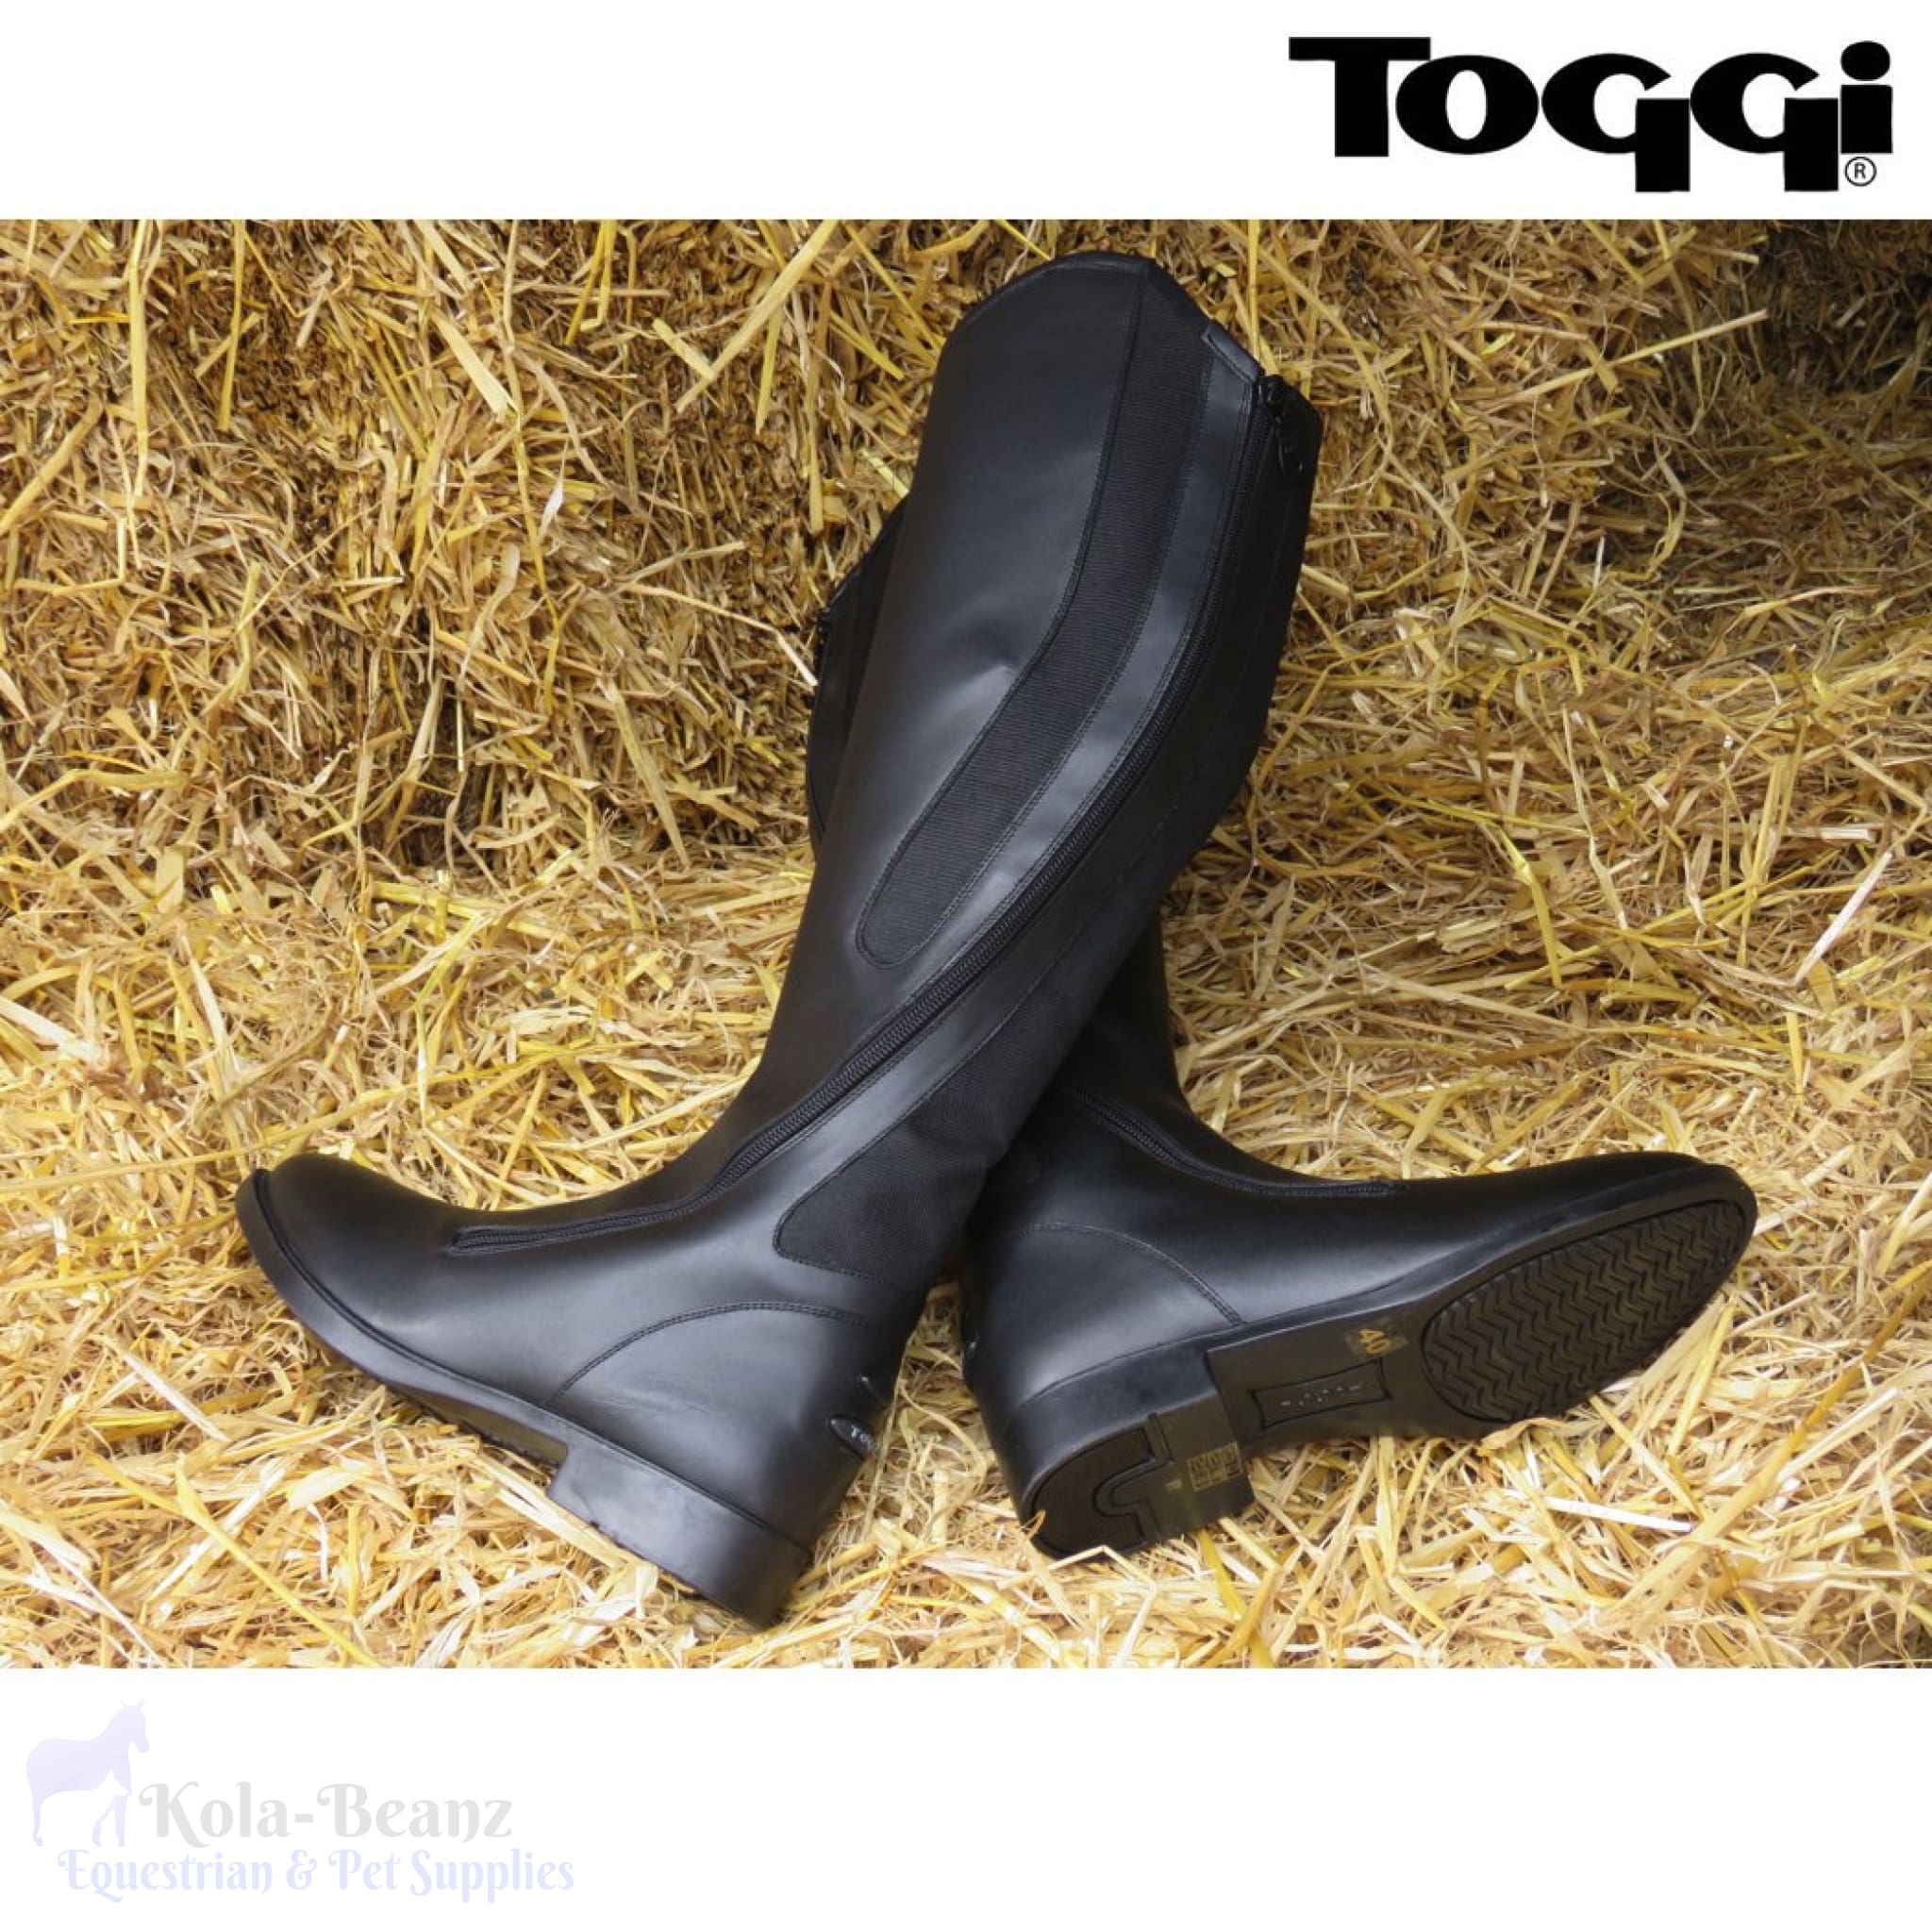 toggi riding boots sale